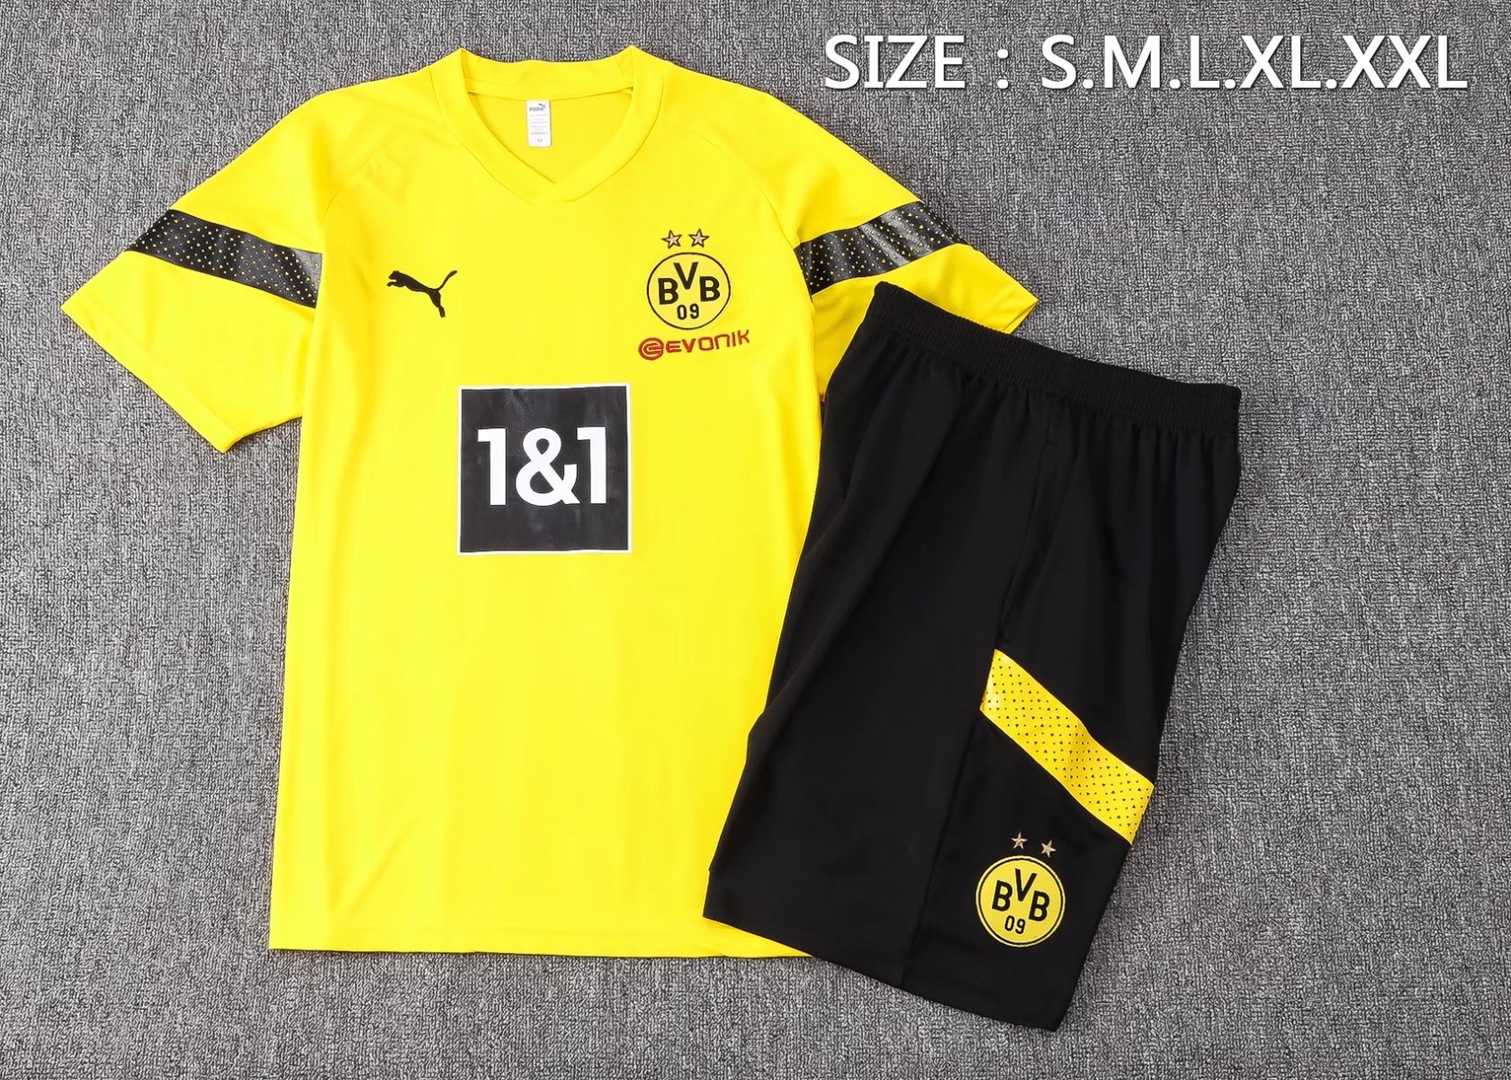 Borussia Dortmund Soccer Jersey + Short Replica Yellow 2022/23 Mens